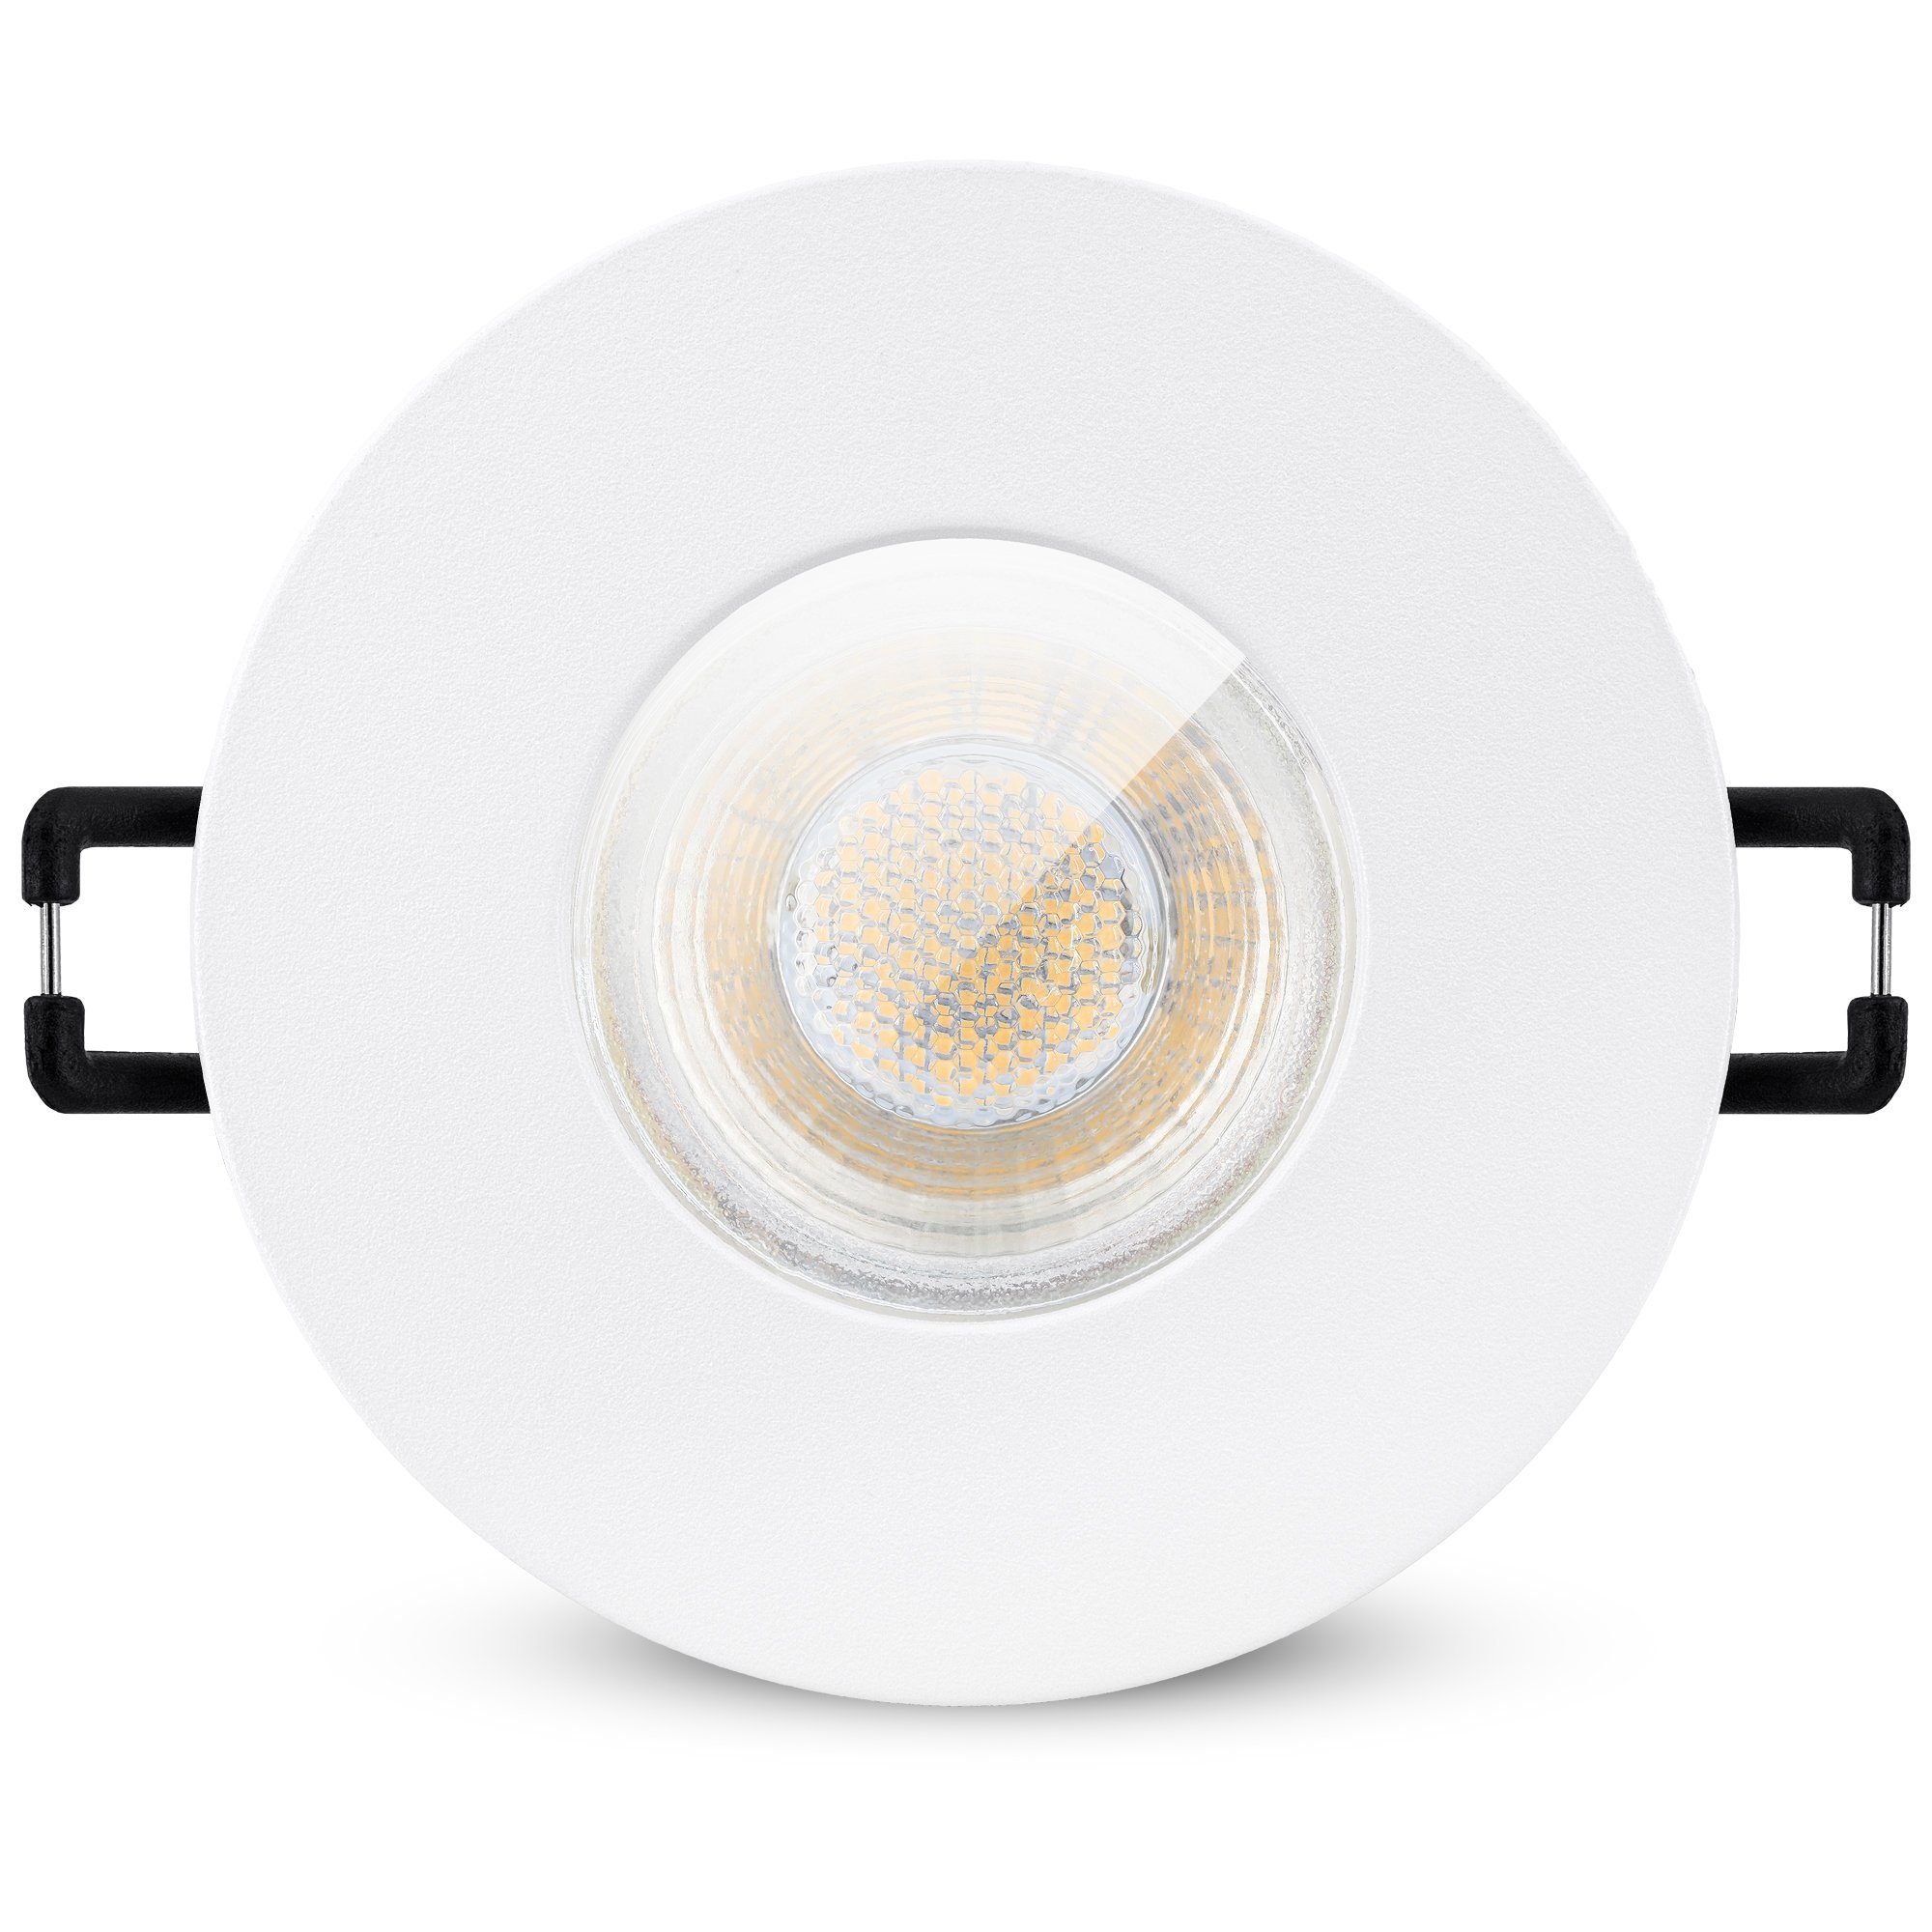 linovum LED Einbaustrahler LED Einbaustrahler IP65 warmweiss GU10 3W 230V - Einbauspot, Leuchtmittel inklusive, Leuchtmittel inklusive